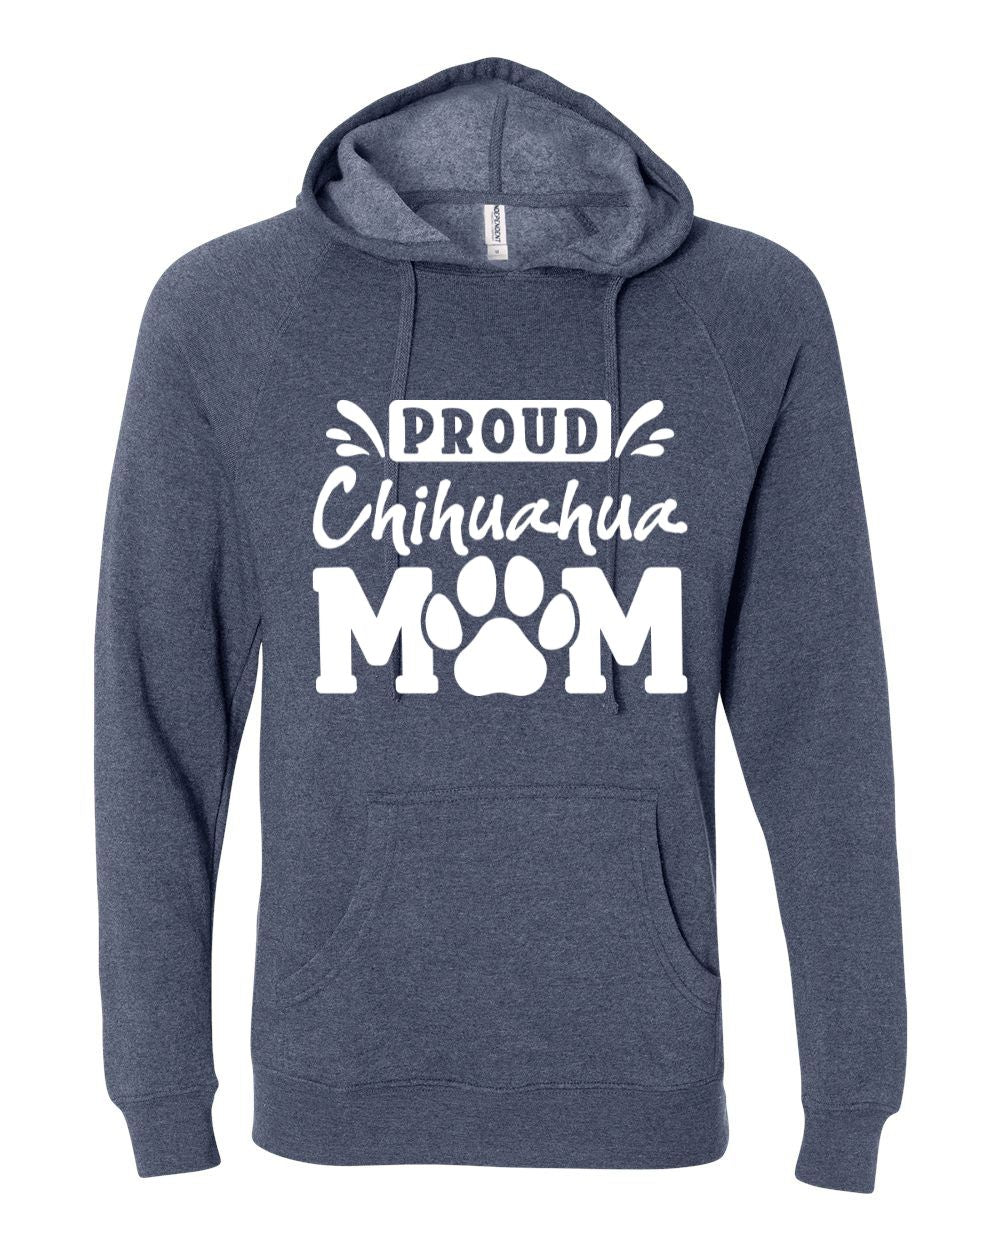 Proud Chihuahua Mom Hoodie